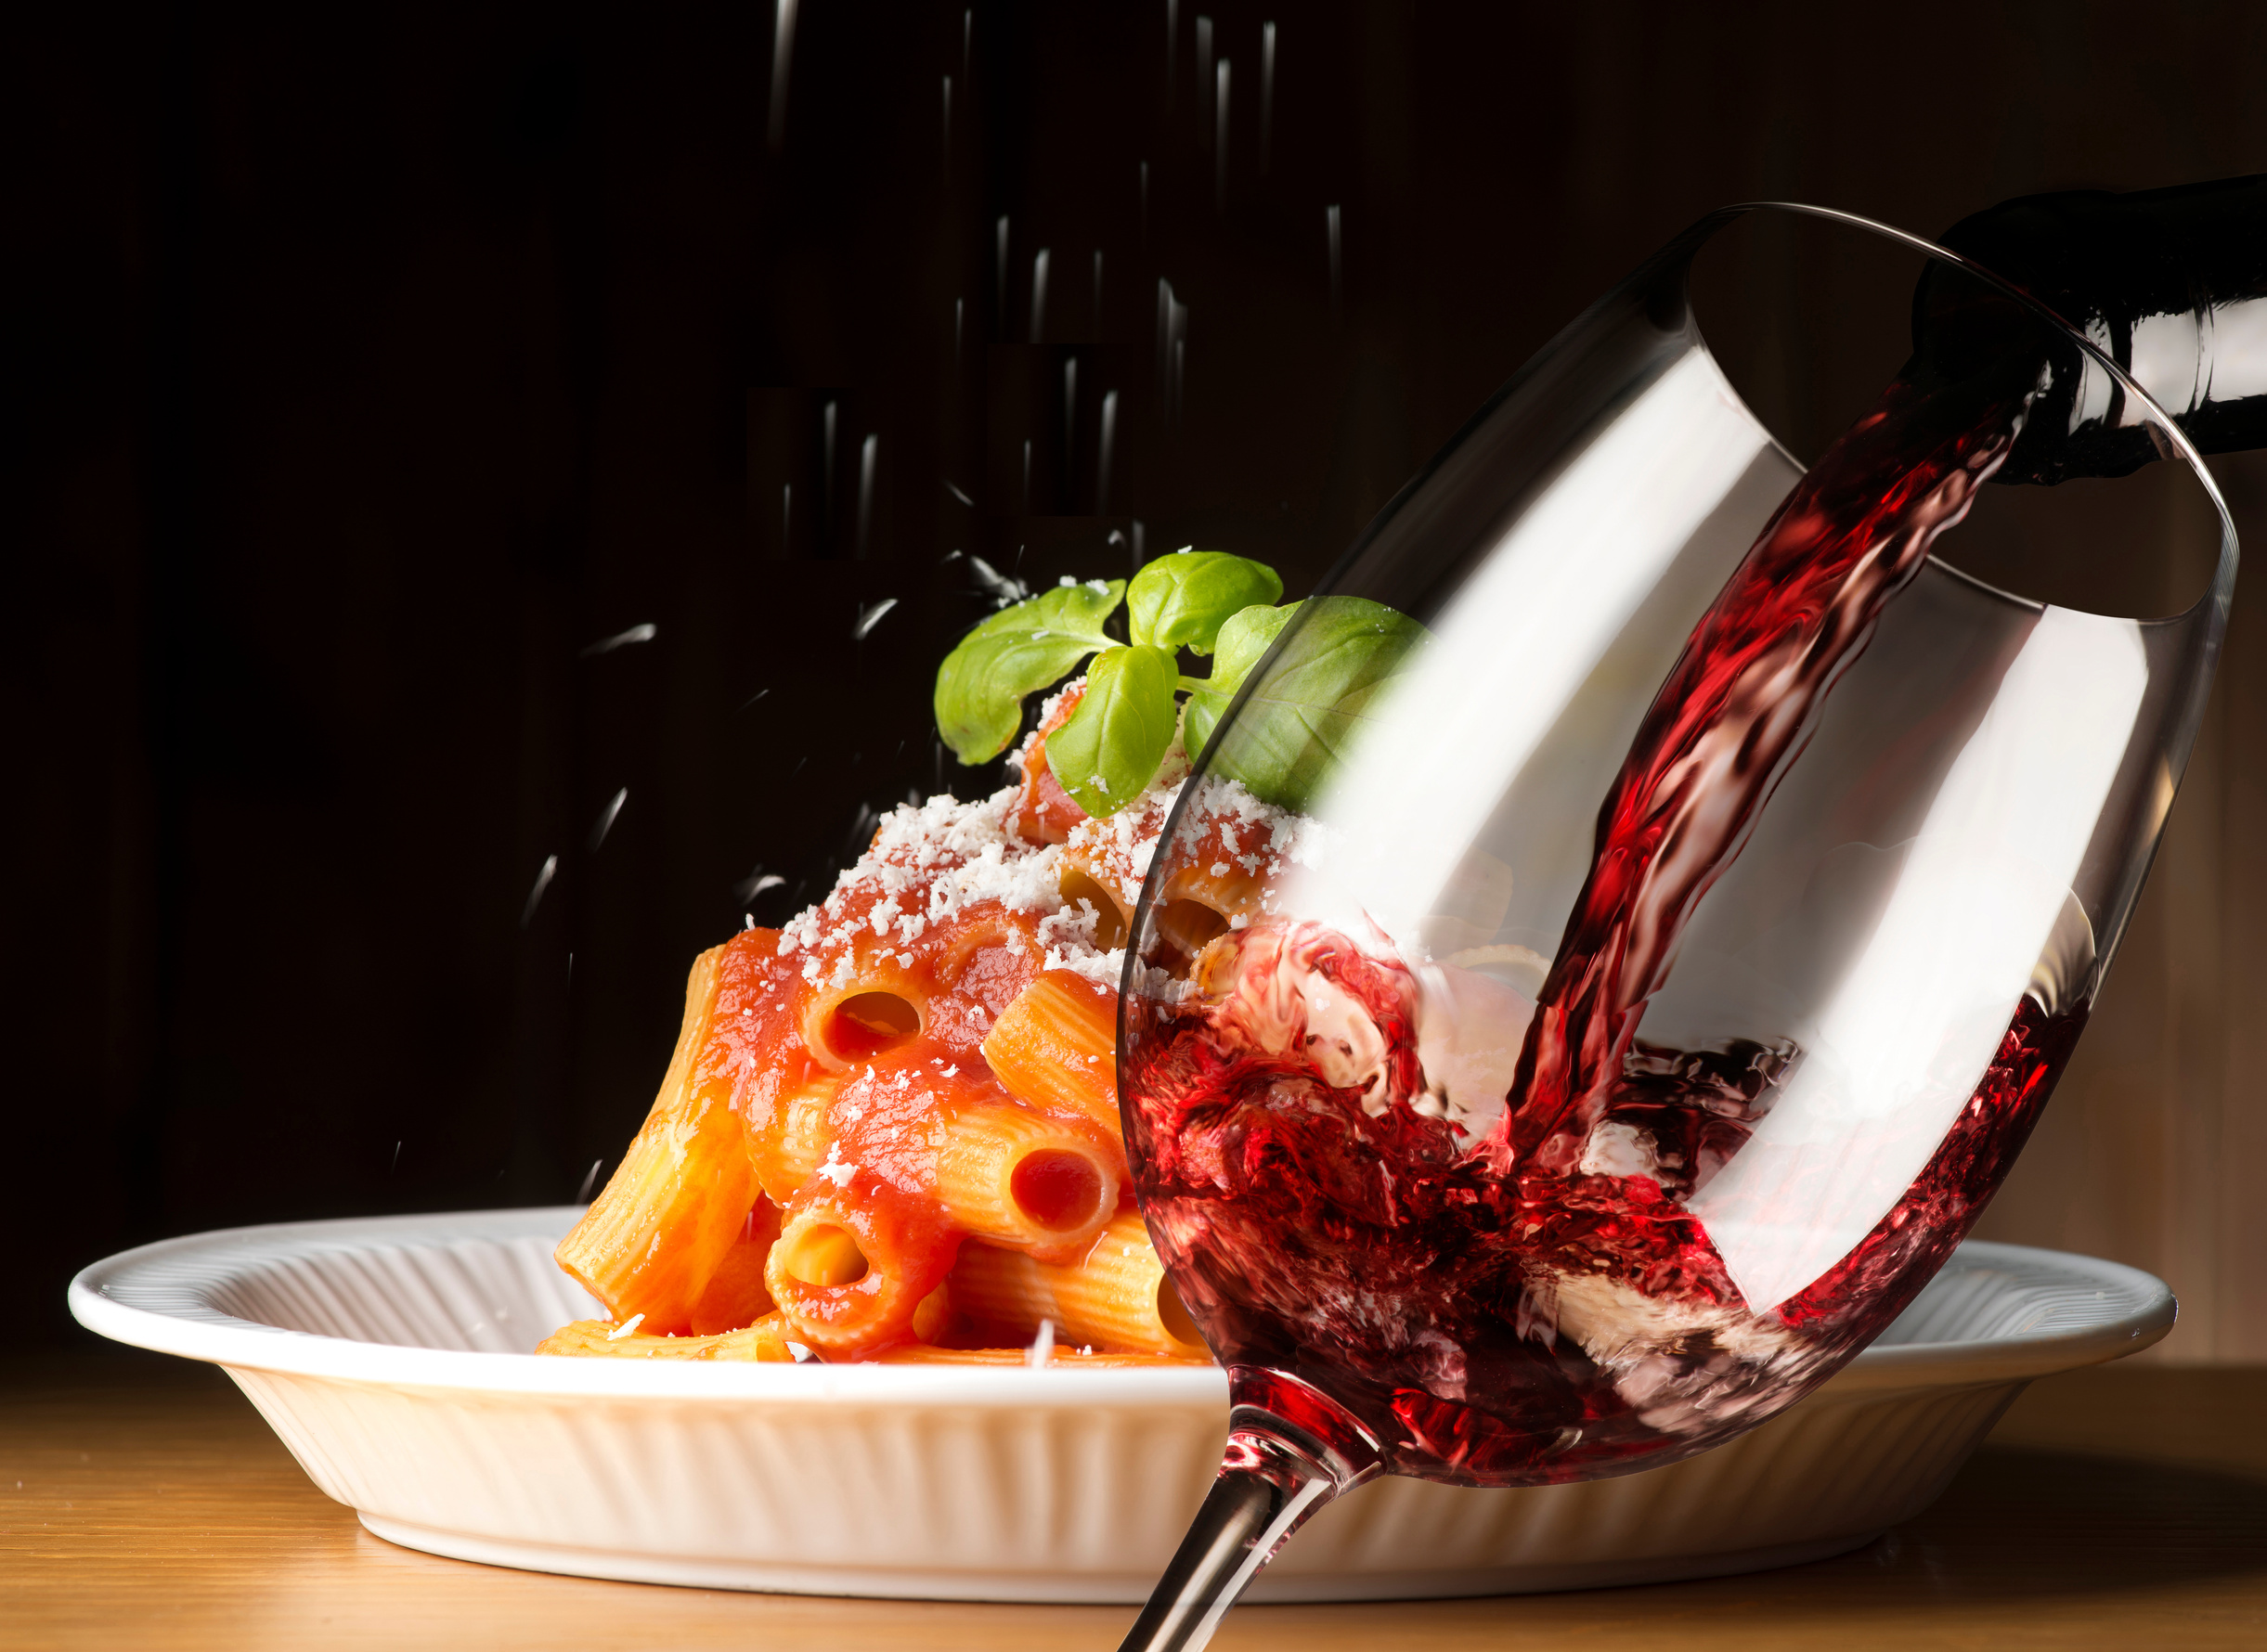 Italian food and red wine